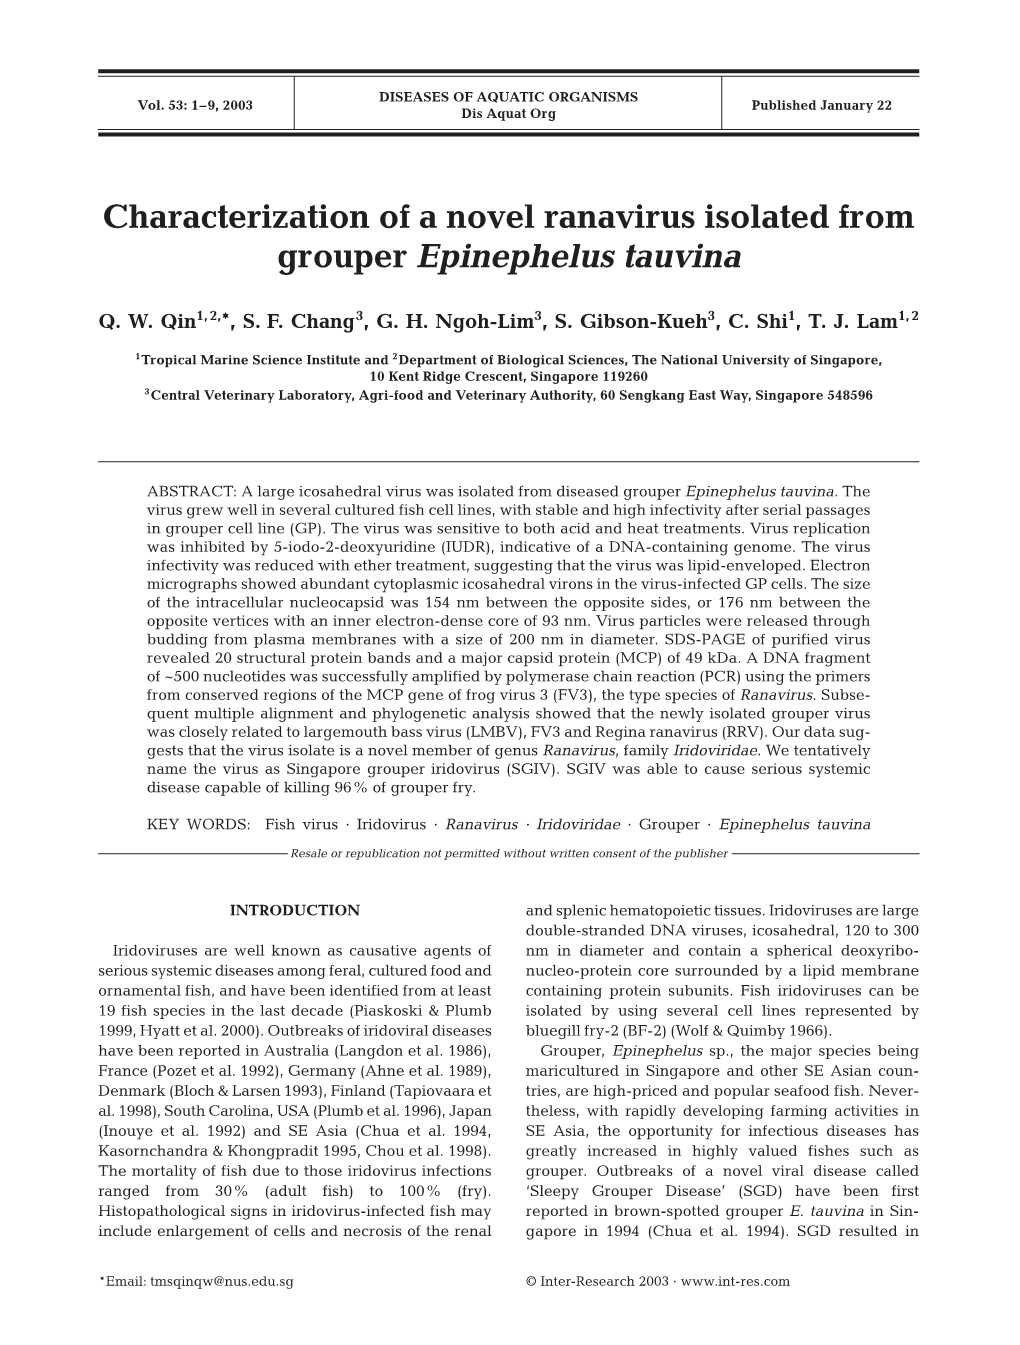 Characterization of a Novel Ranavirus Isolated from Grouper Epinephelus Tauvina